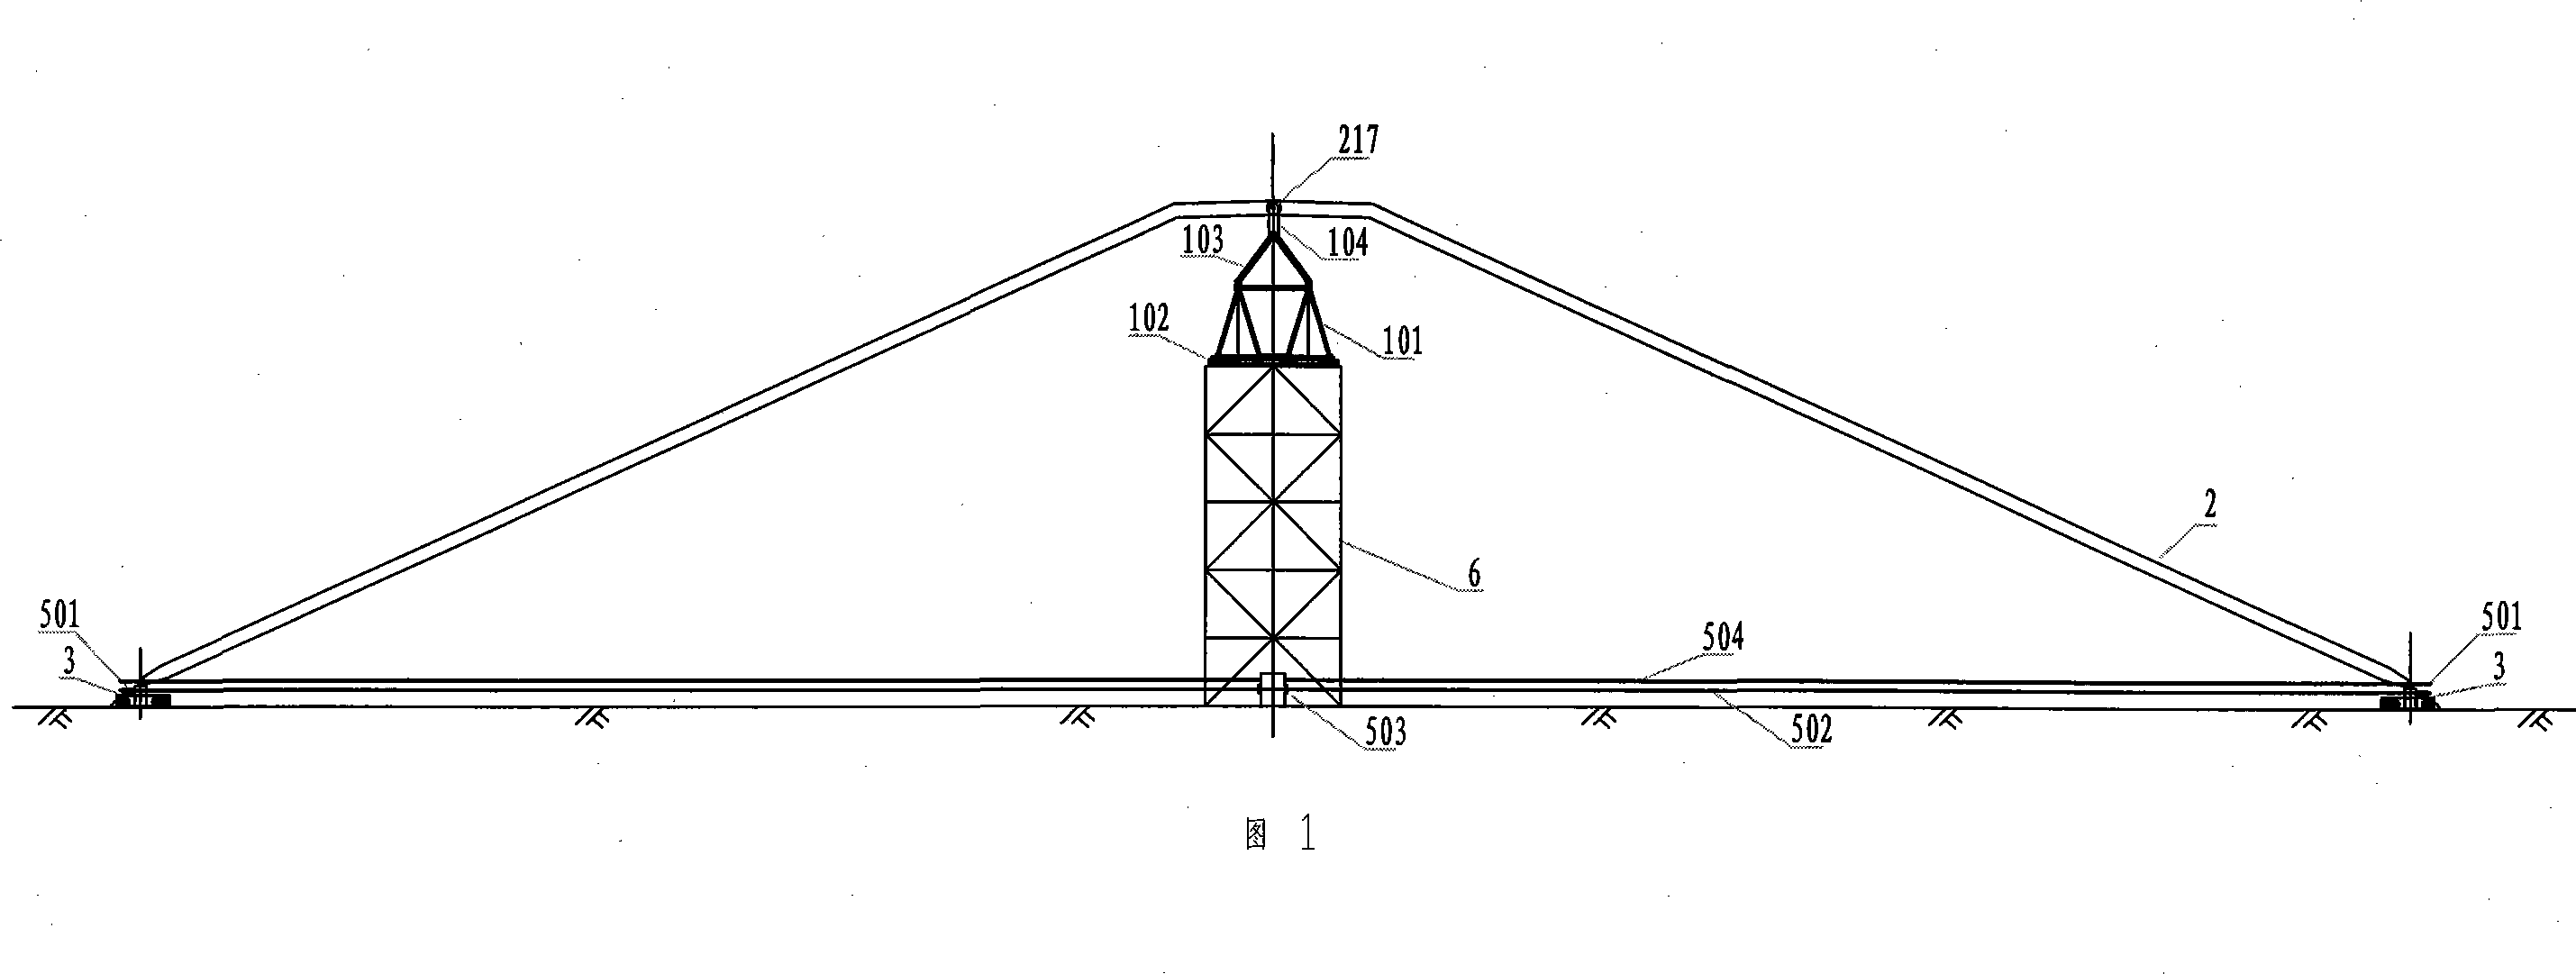 Mounting and dismounting method for gantry crane